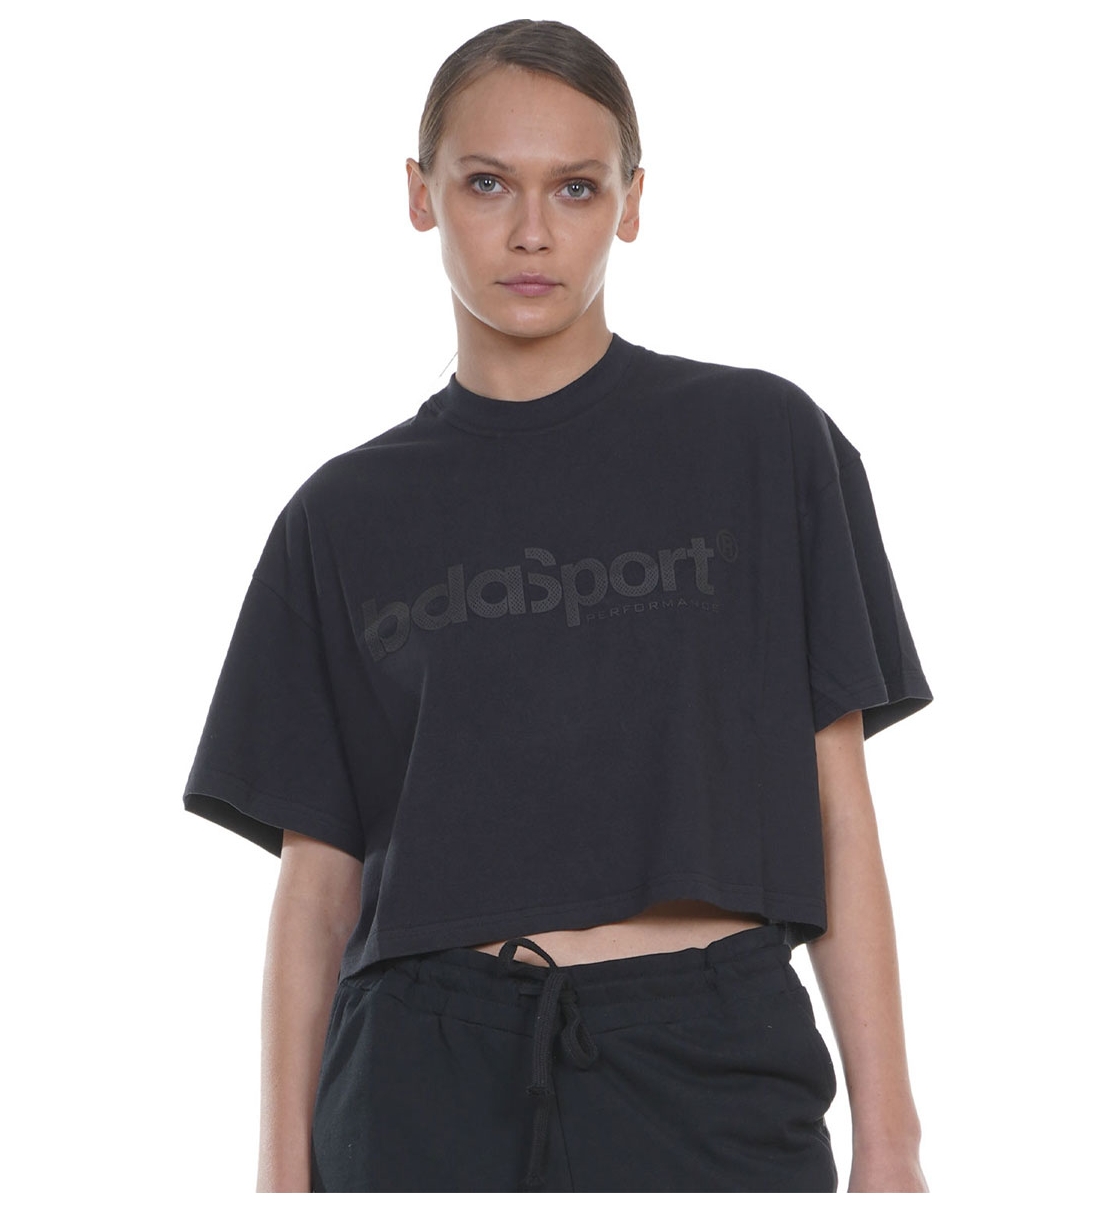 Body Action Ss22 Women'S Short Sleeve Boxy T-Shirt